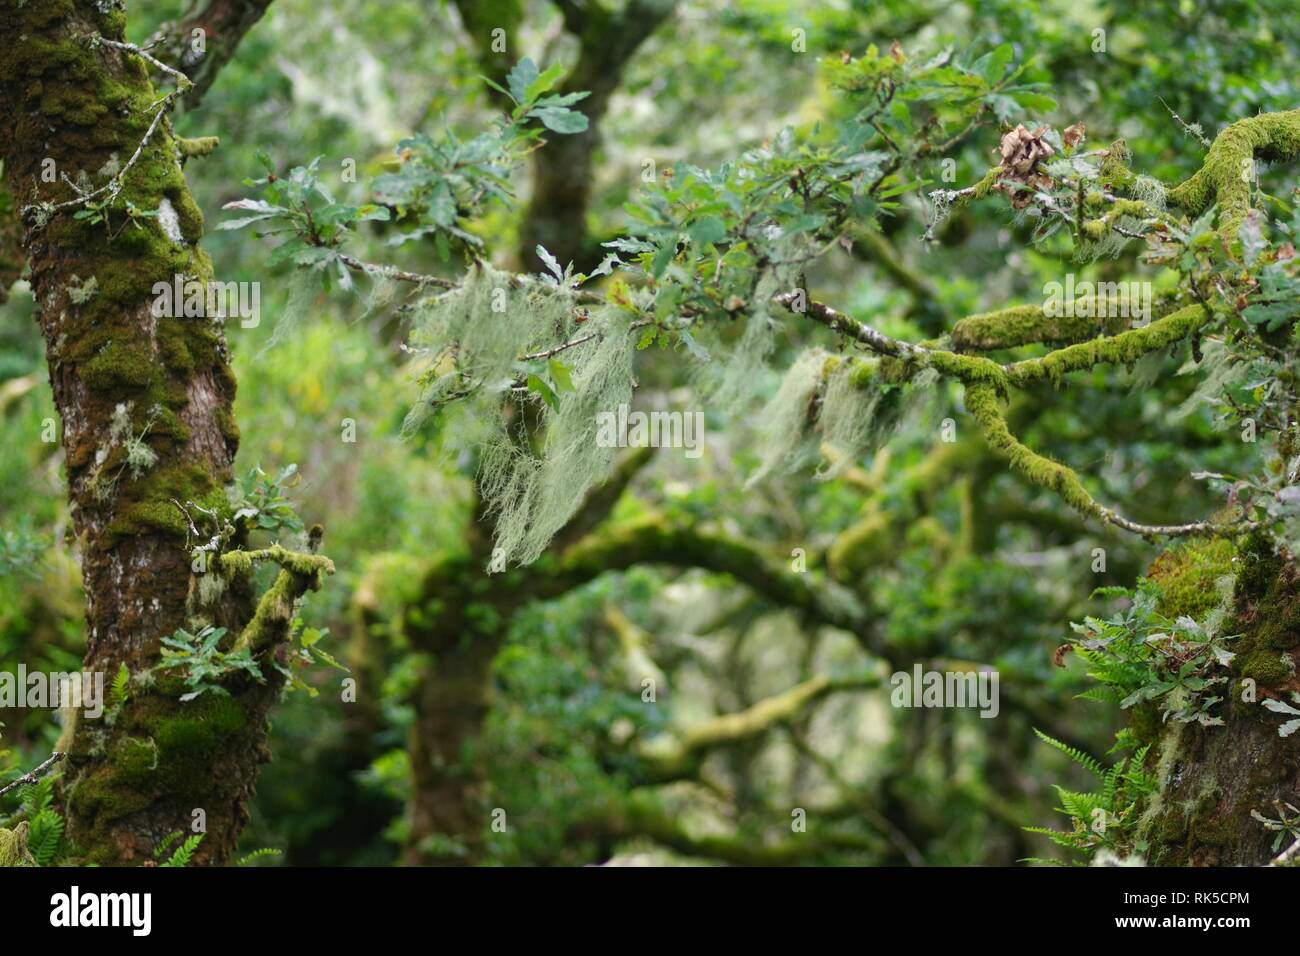 Old Man's Beard Lichen, Usnea, Fruticose Lichen Growing in Wistmans Wood, Dartmoor National Park, Two Bridges. Devon, UK. Stock Photo